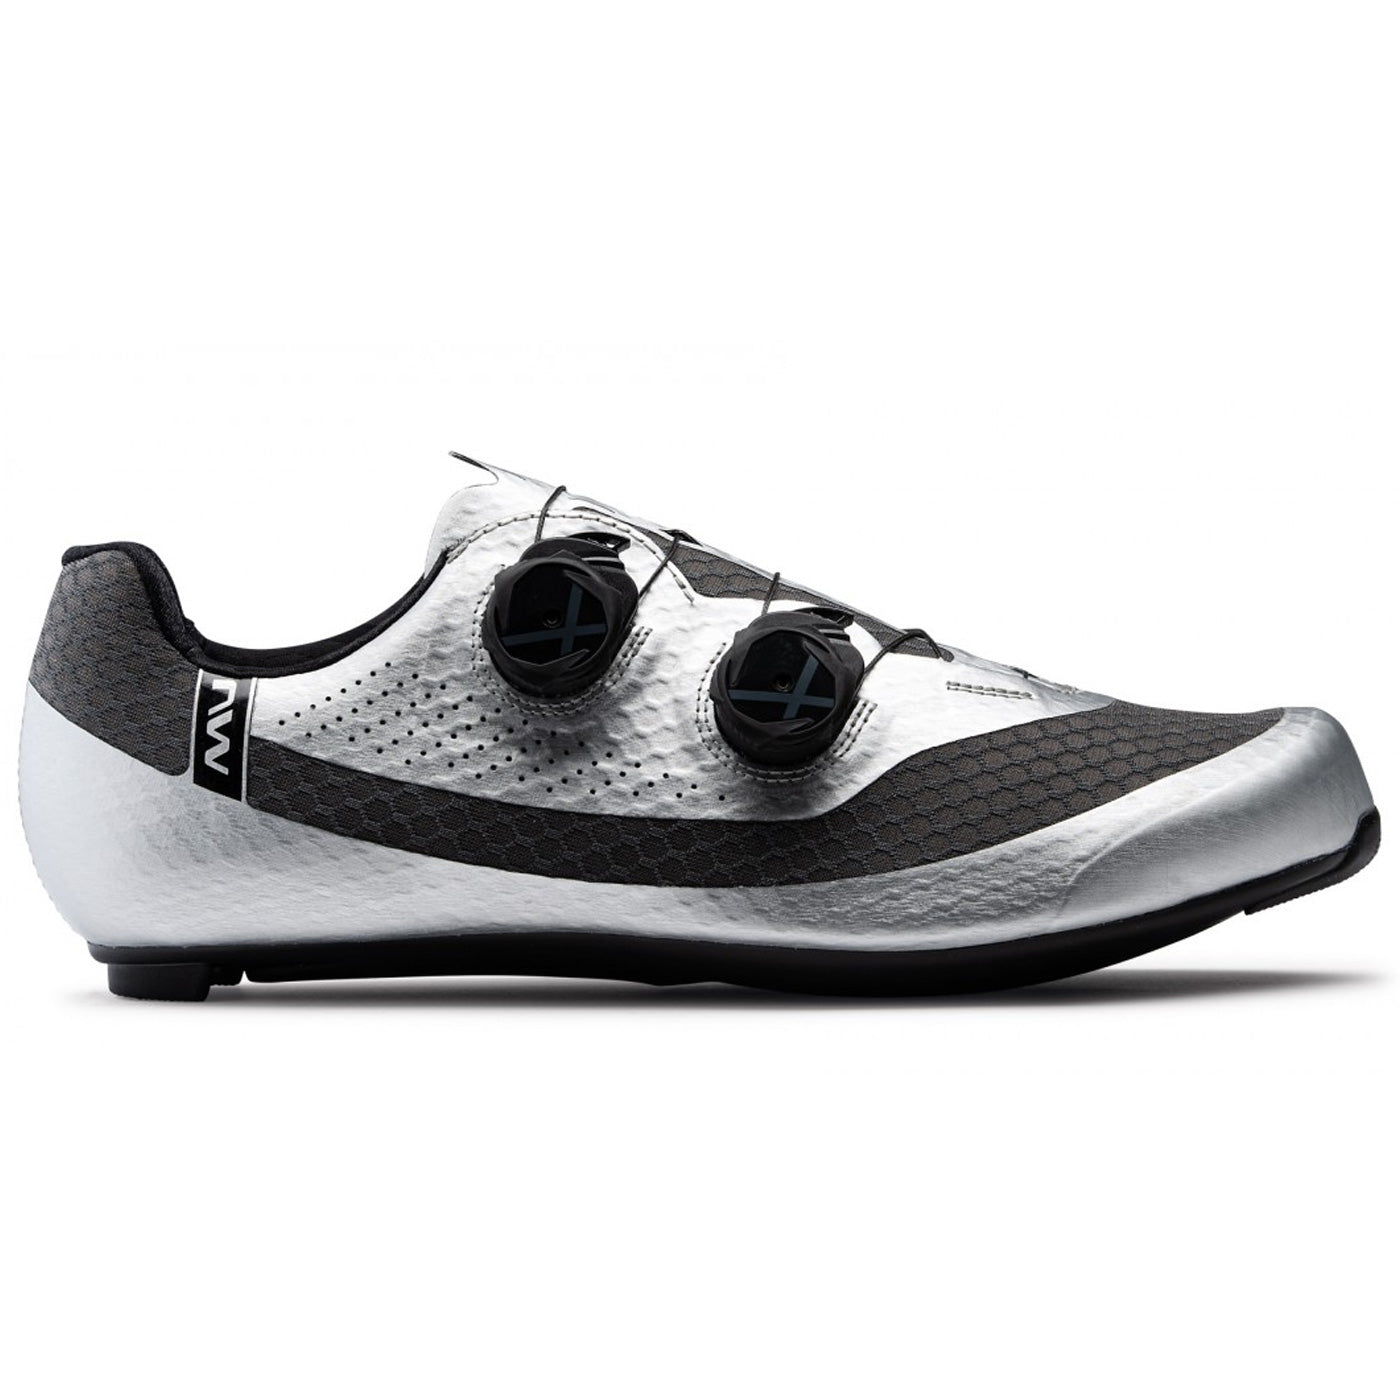 Northwave Scorpius 2 Black-White Shoes 2015